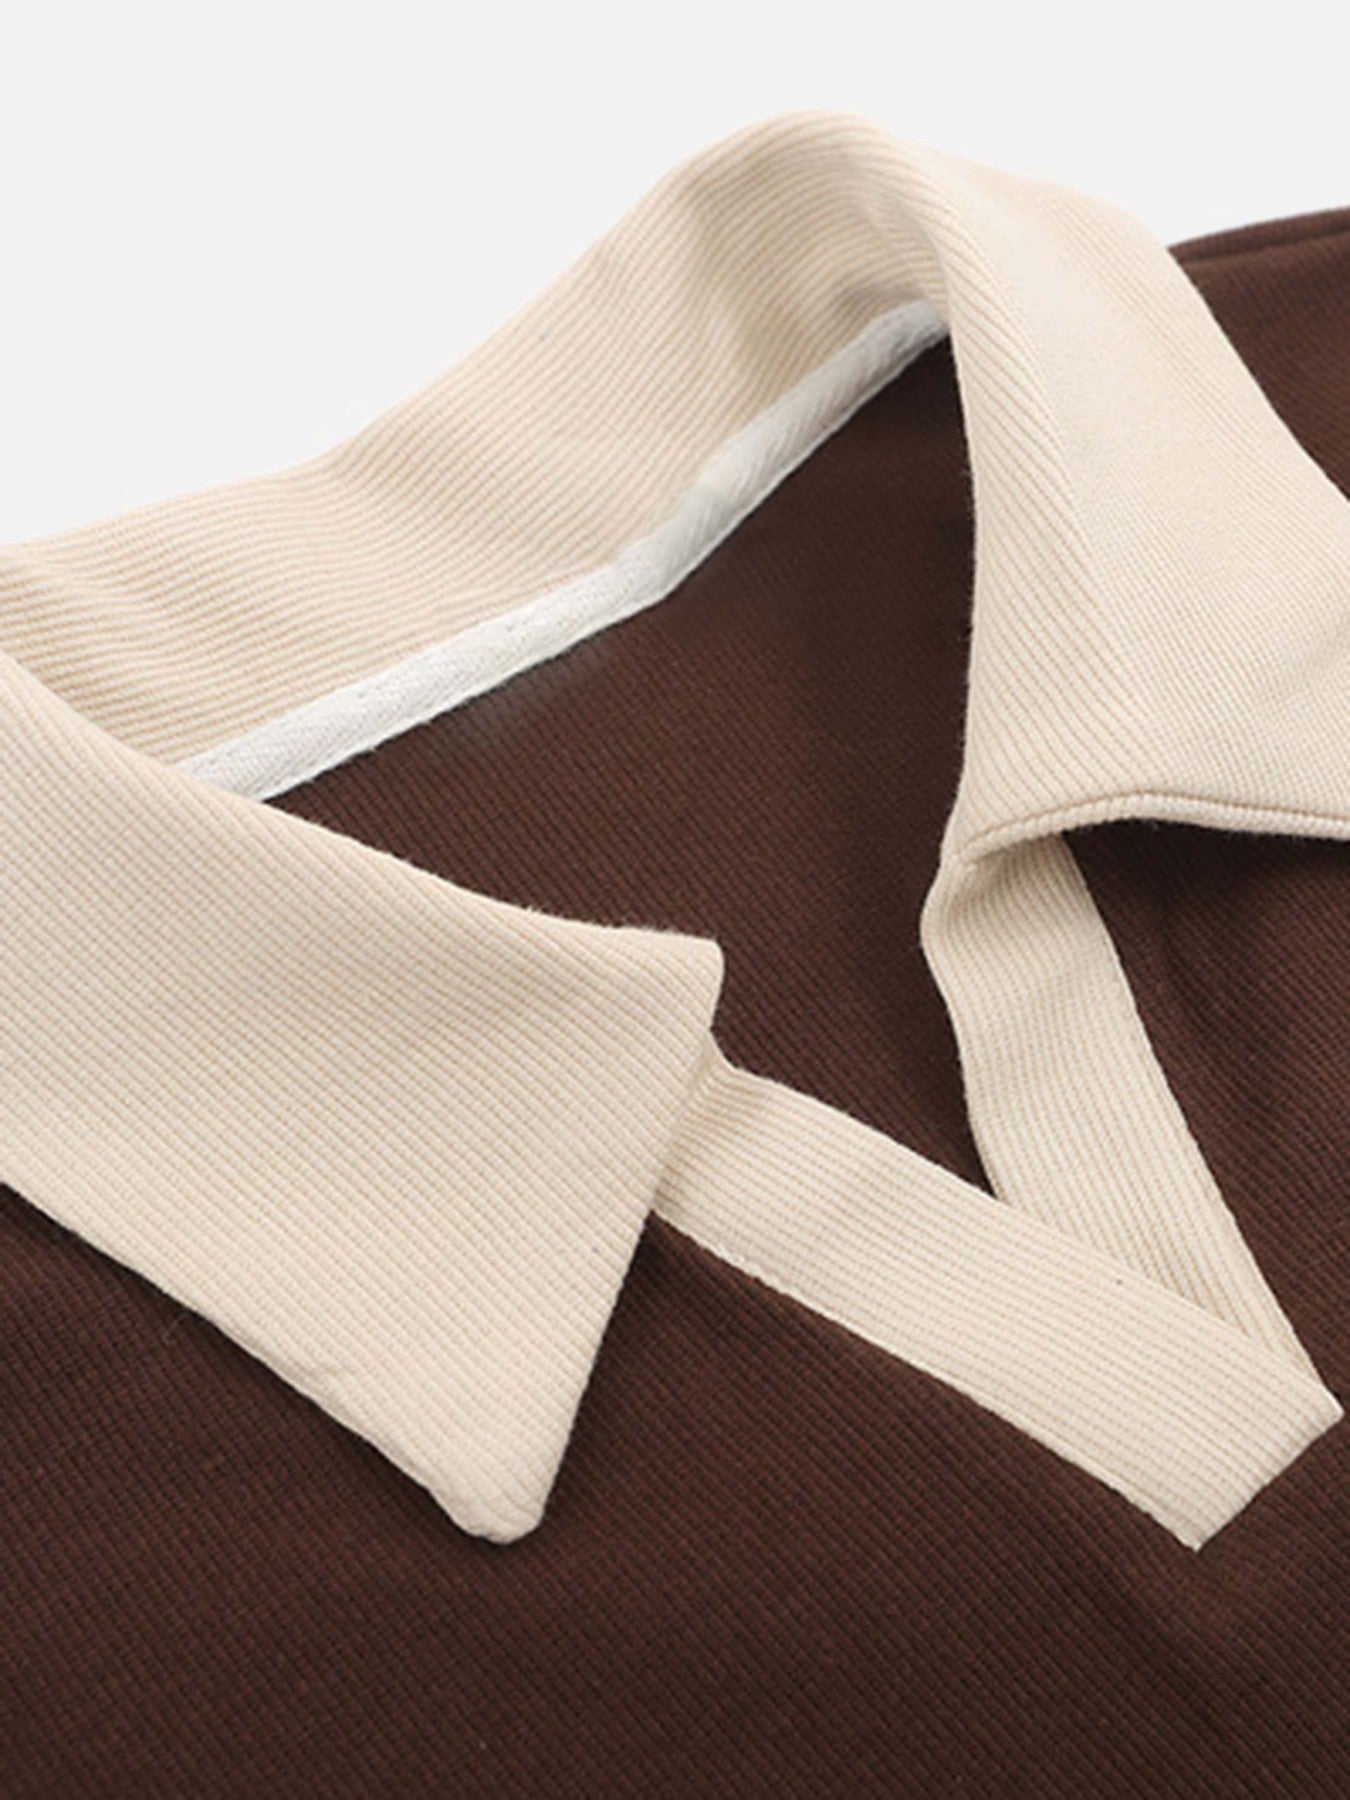 The Supermade Vintage Lapel Tie Women's Polo Shirt